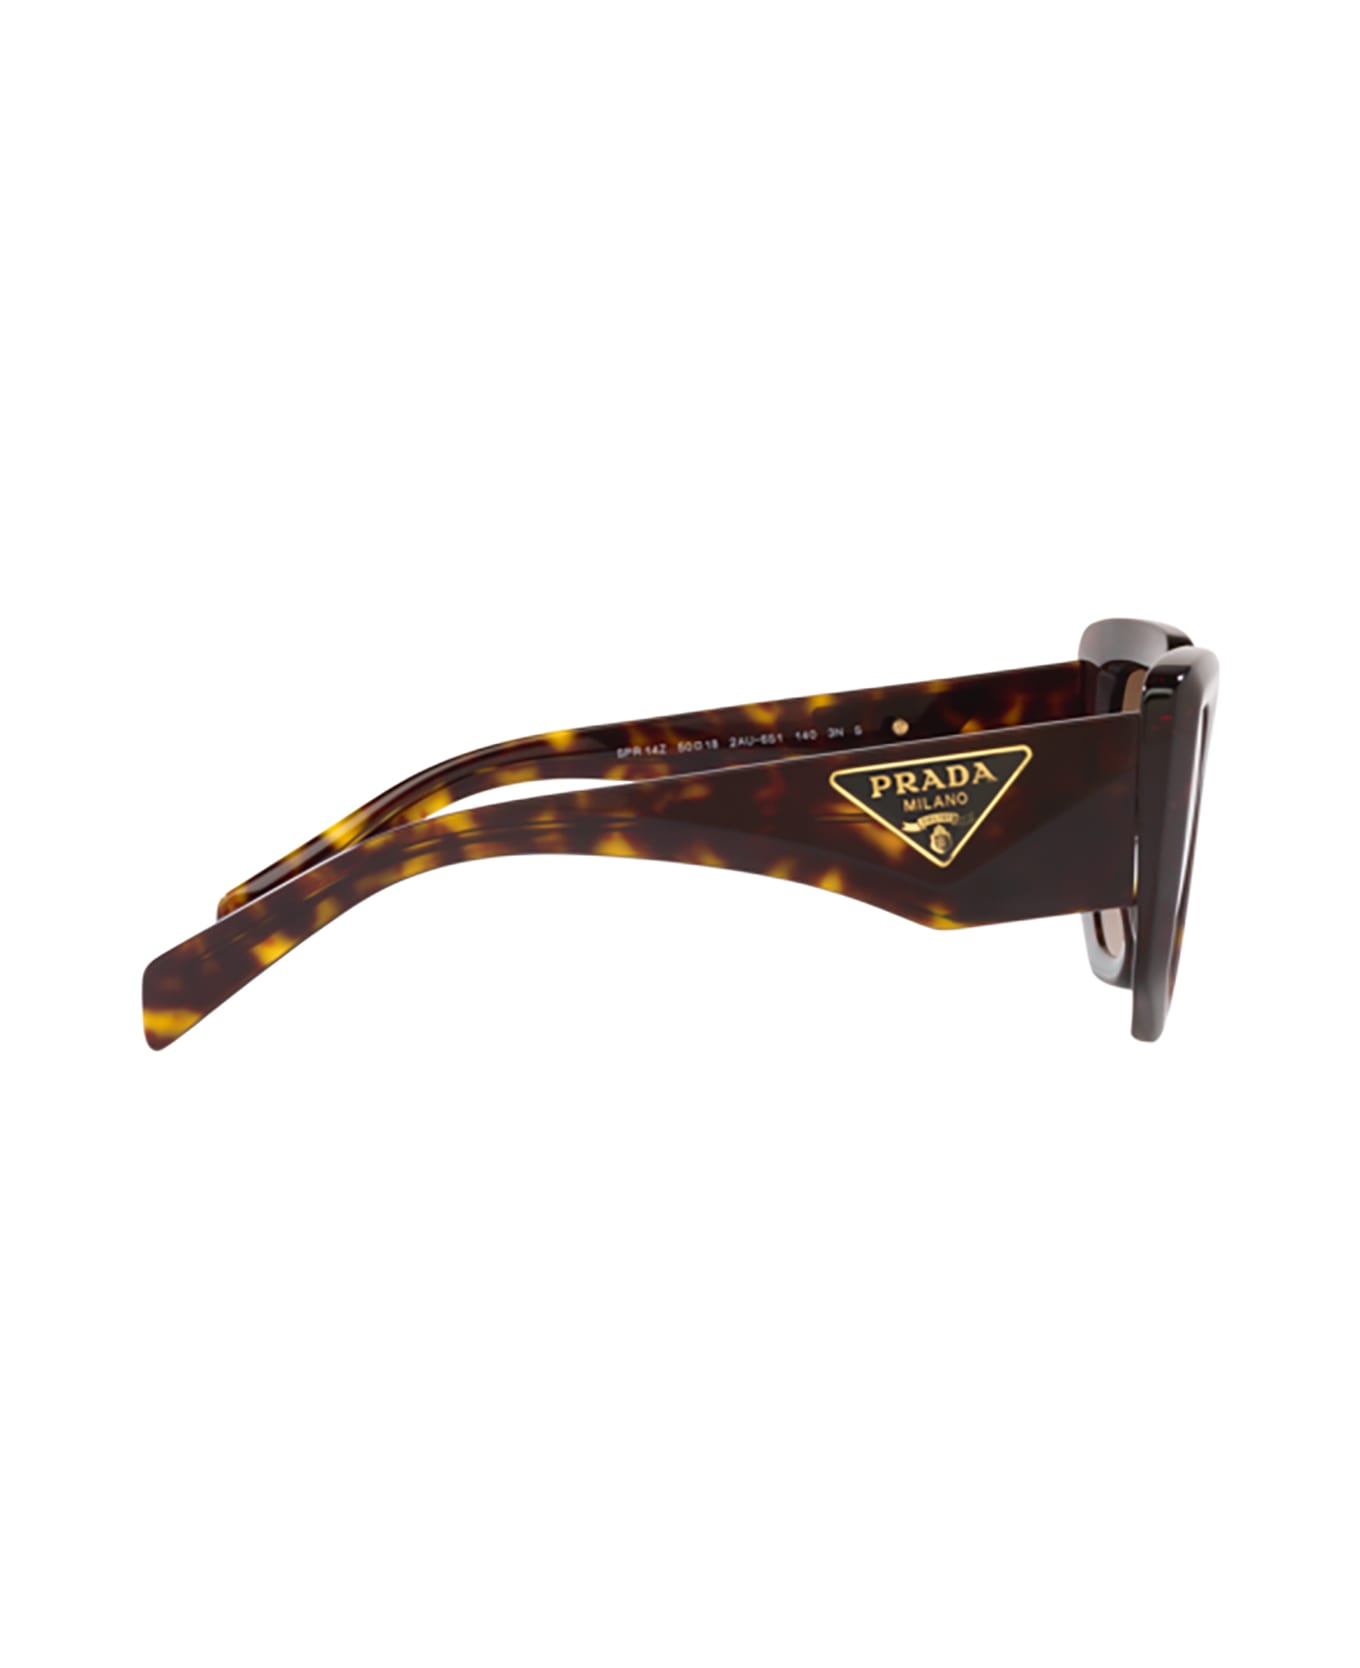 Prada Eyewear Pr 14zs Tortoise Sunglasses - Tortoise